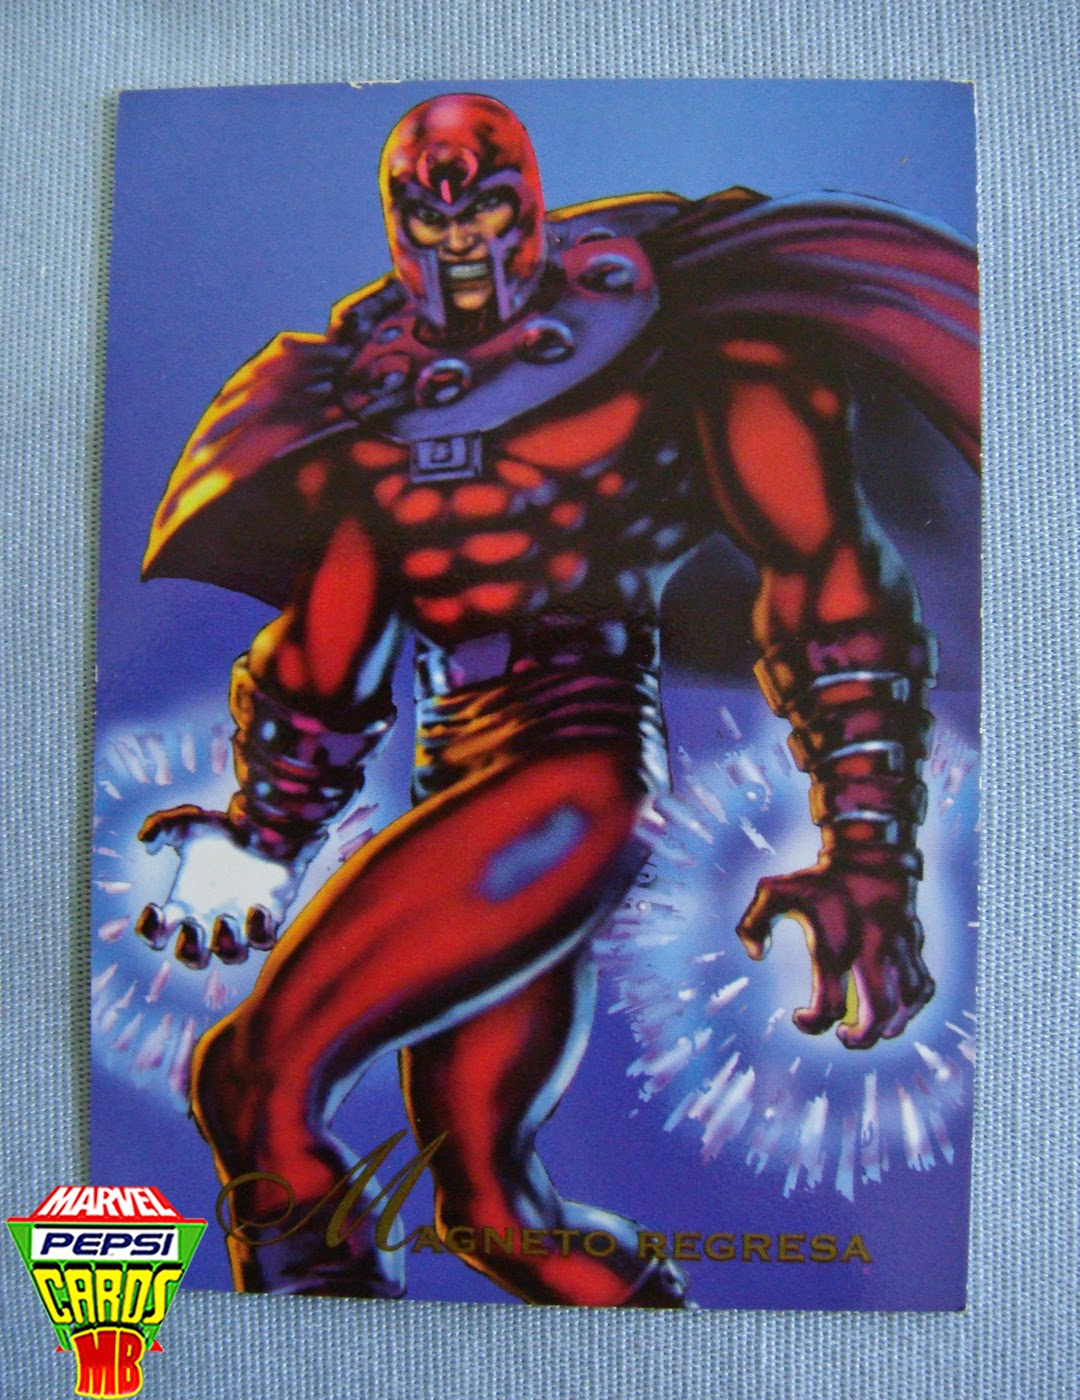 MarvelPepsiCardsMB: Marvel Pepsi Cards - MX - 1994 - 75 - Magneto Regresa